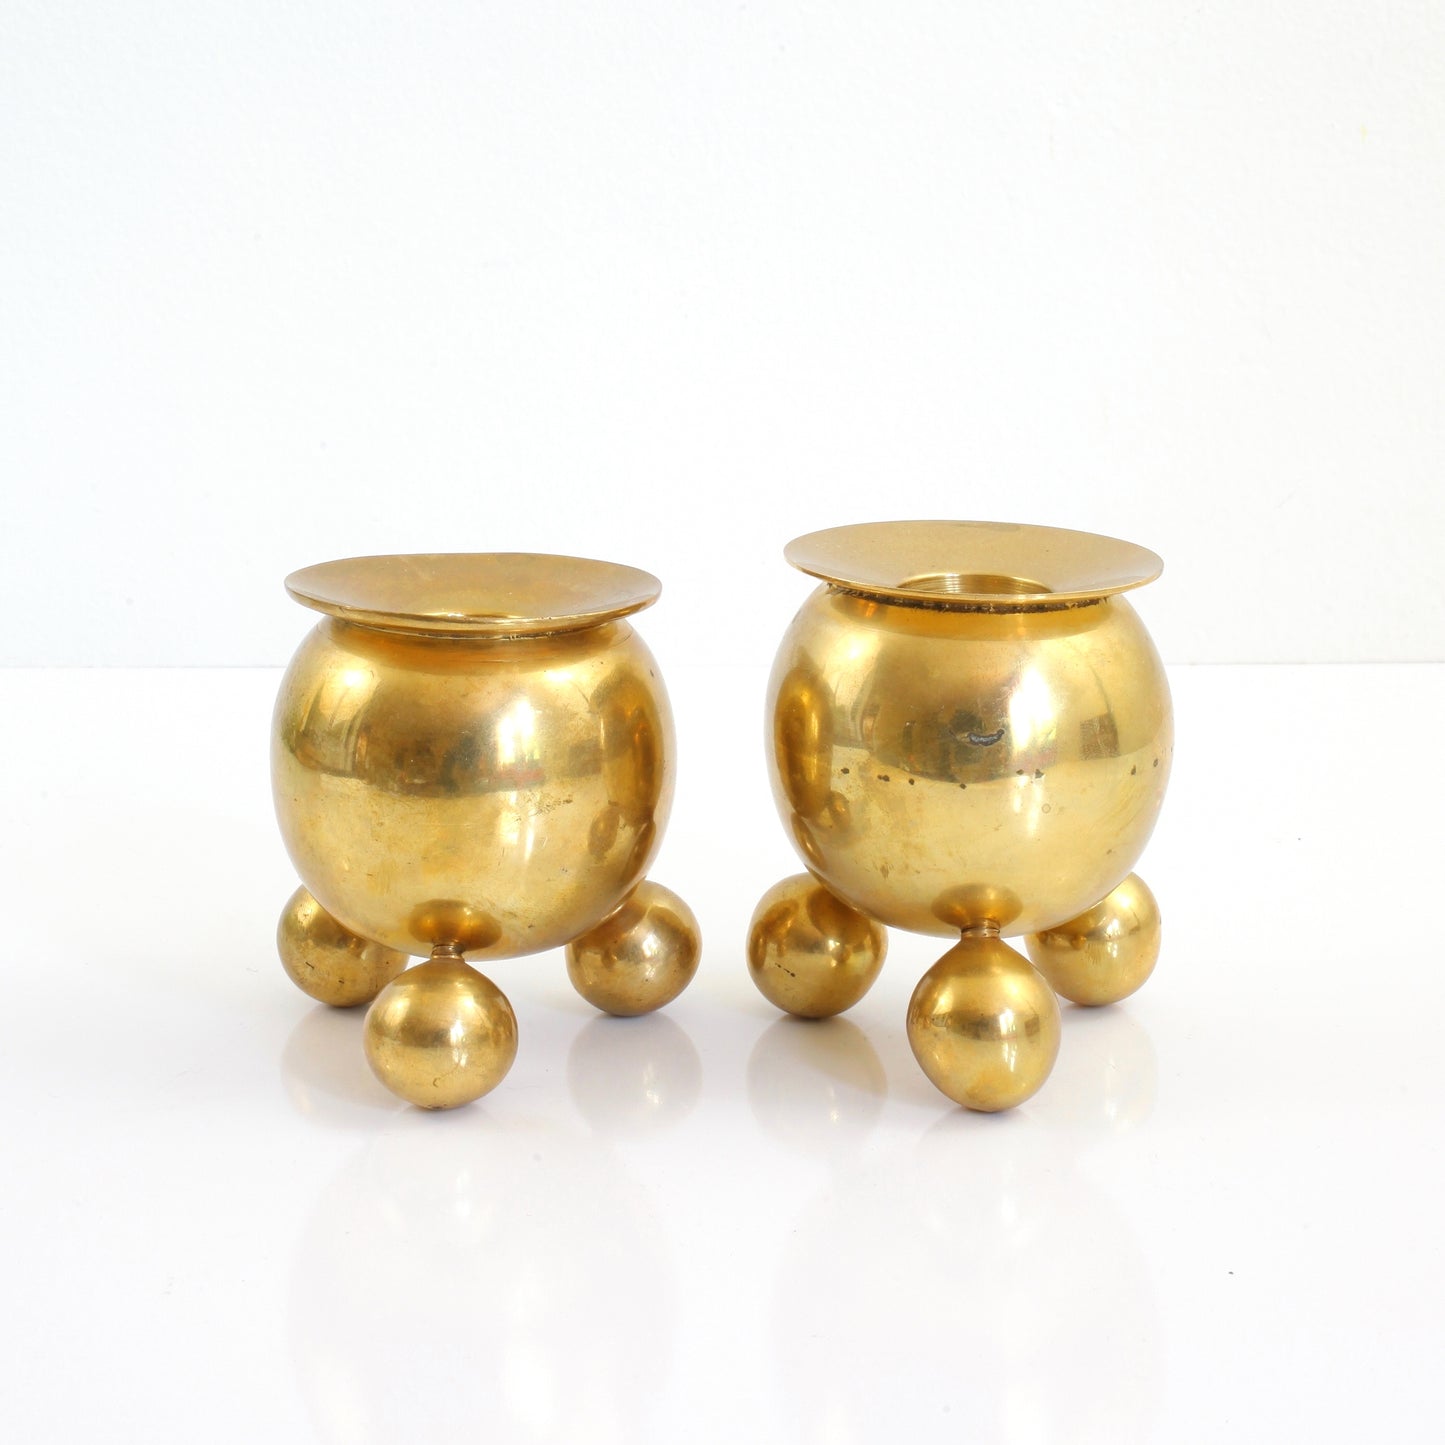 SOLD - Vintage Pair of Bauhaus Brass Sphere Candlesticks